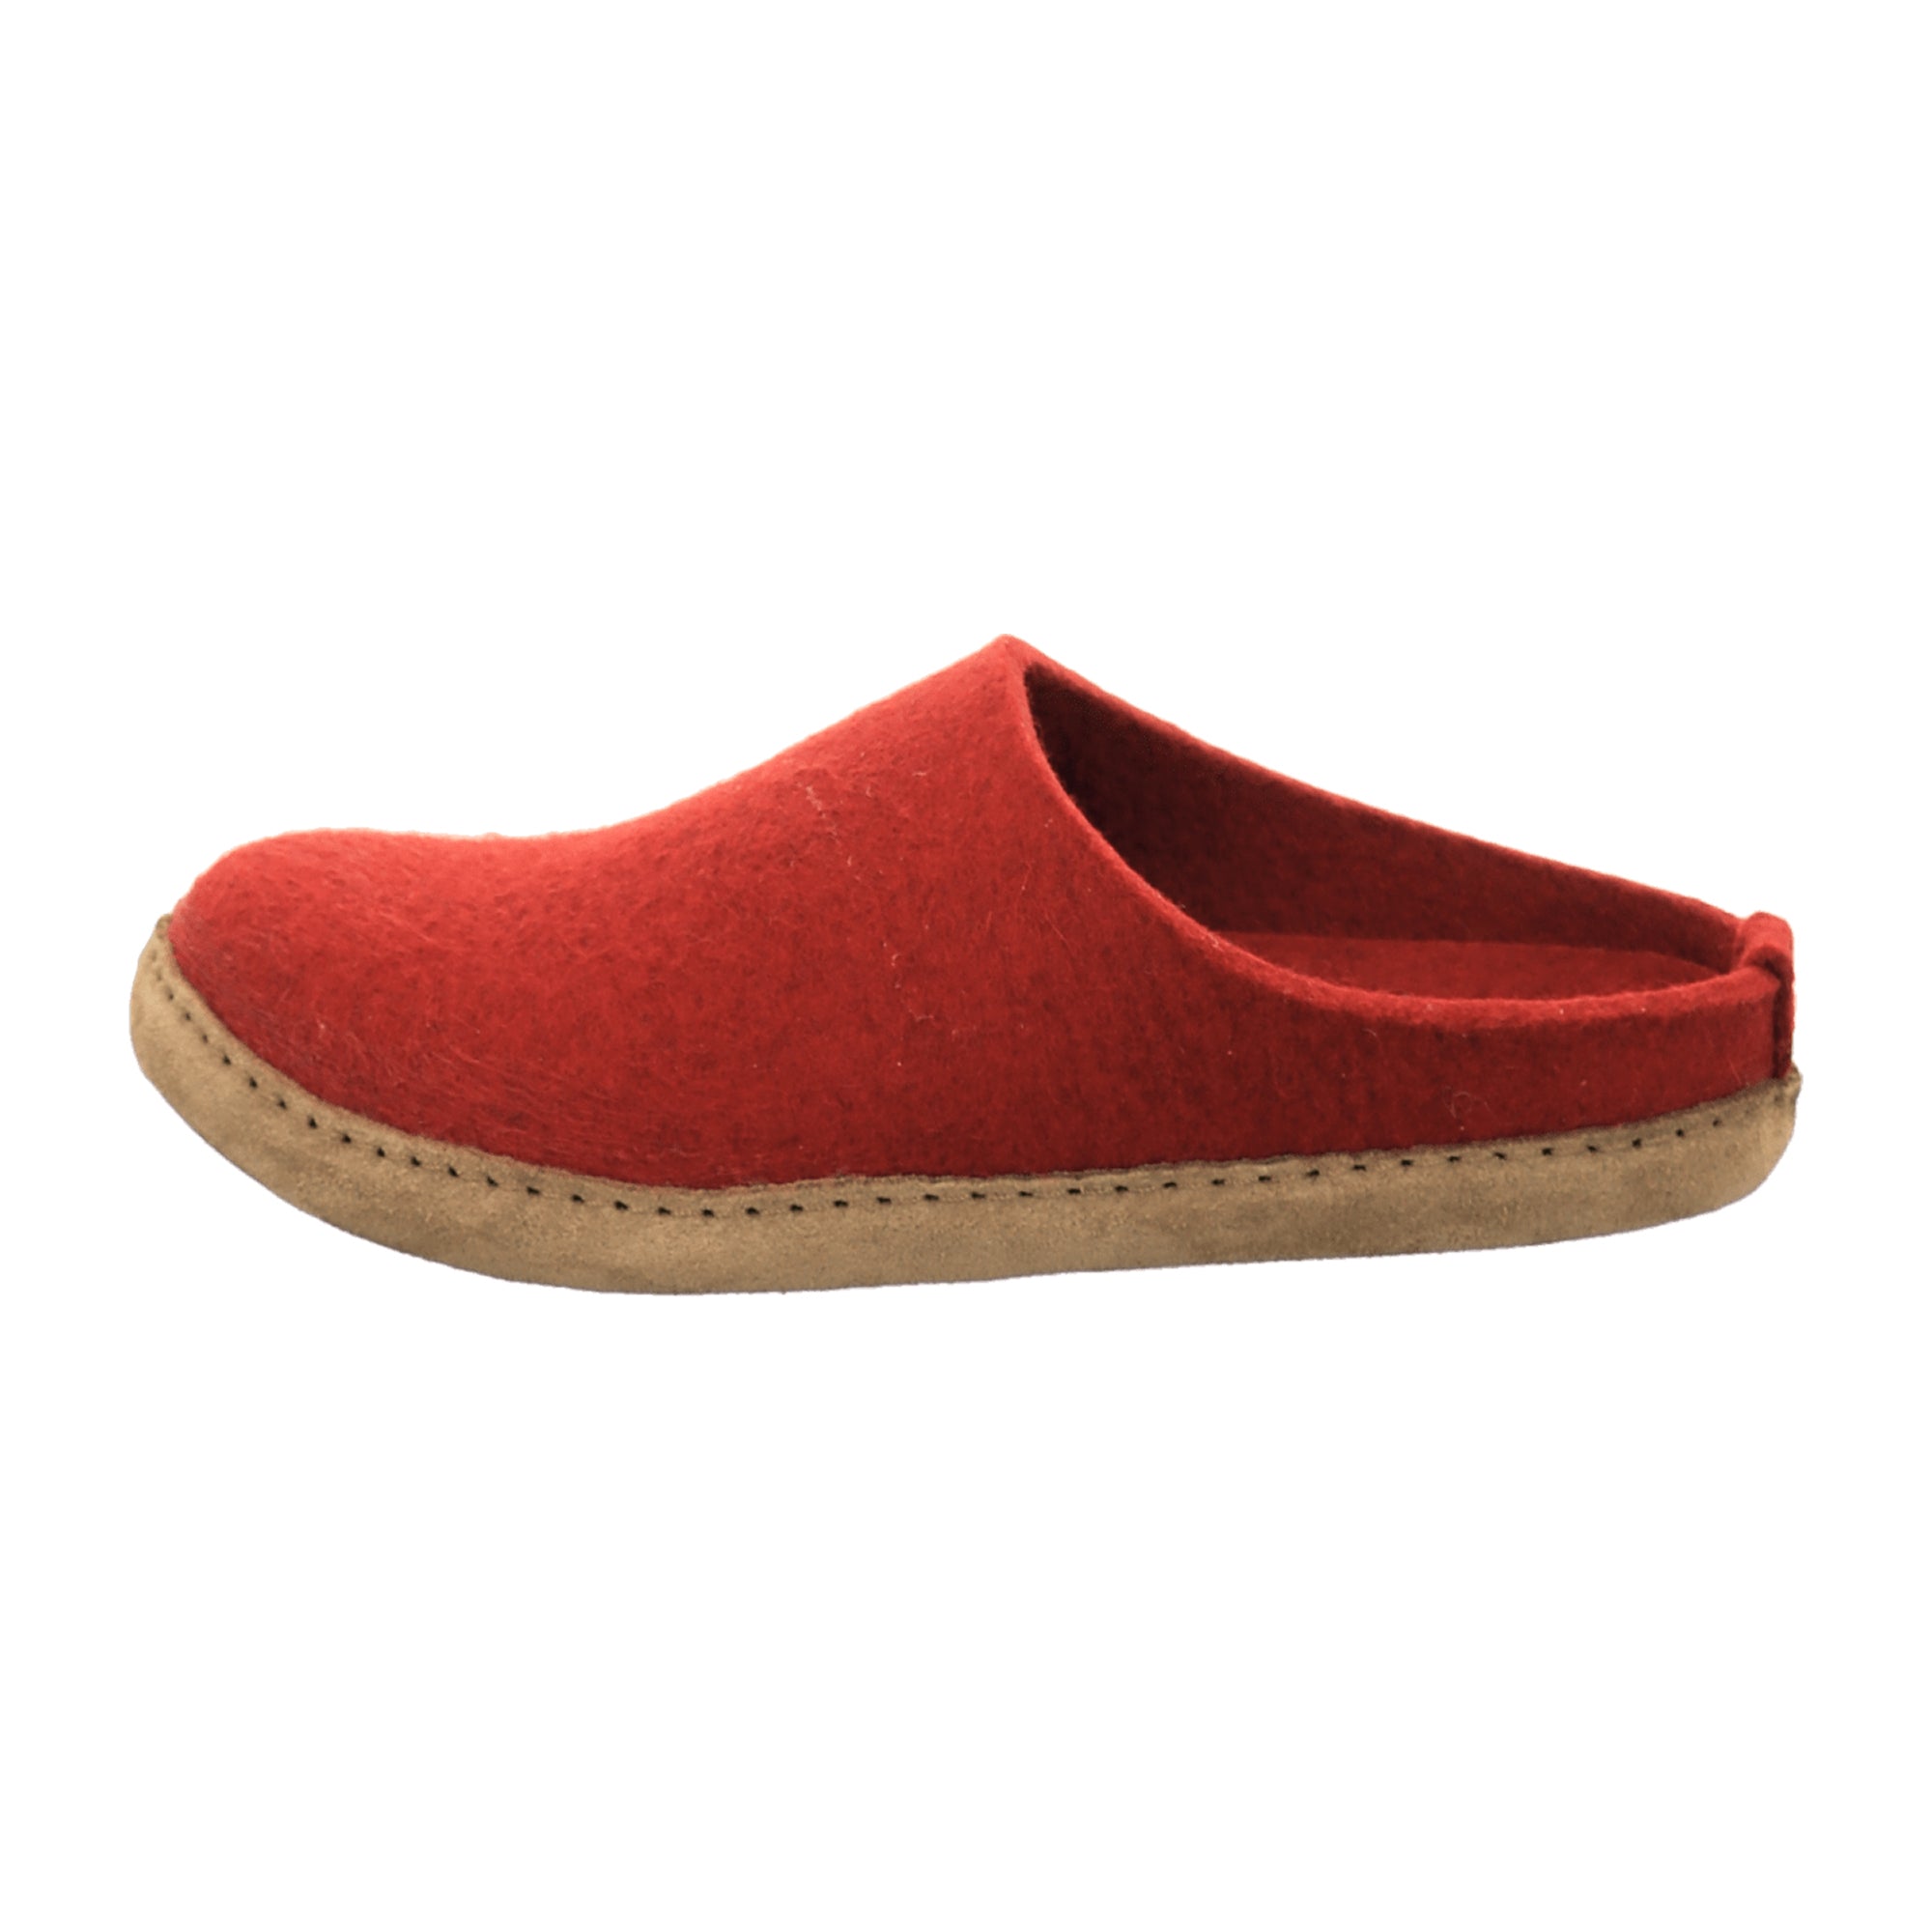 Haflinger Emil's Women's Slippers in Red - Stylish & Comfortable